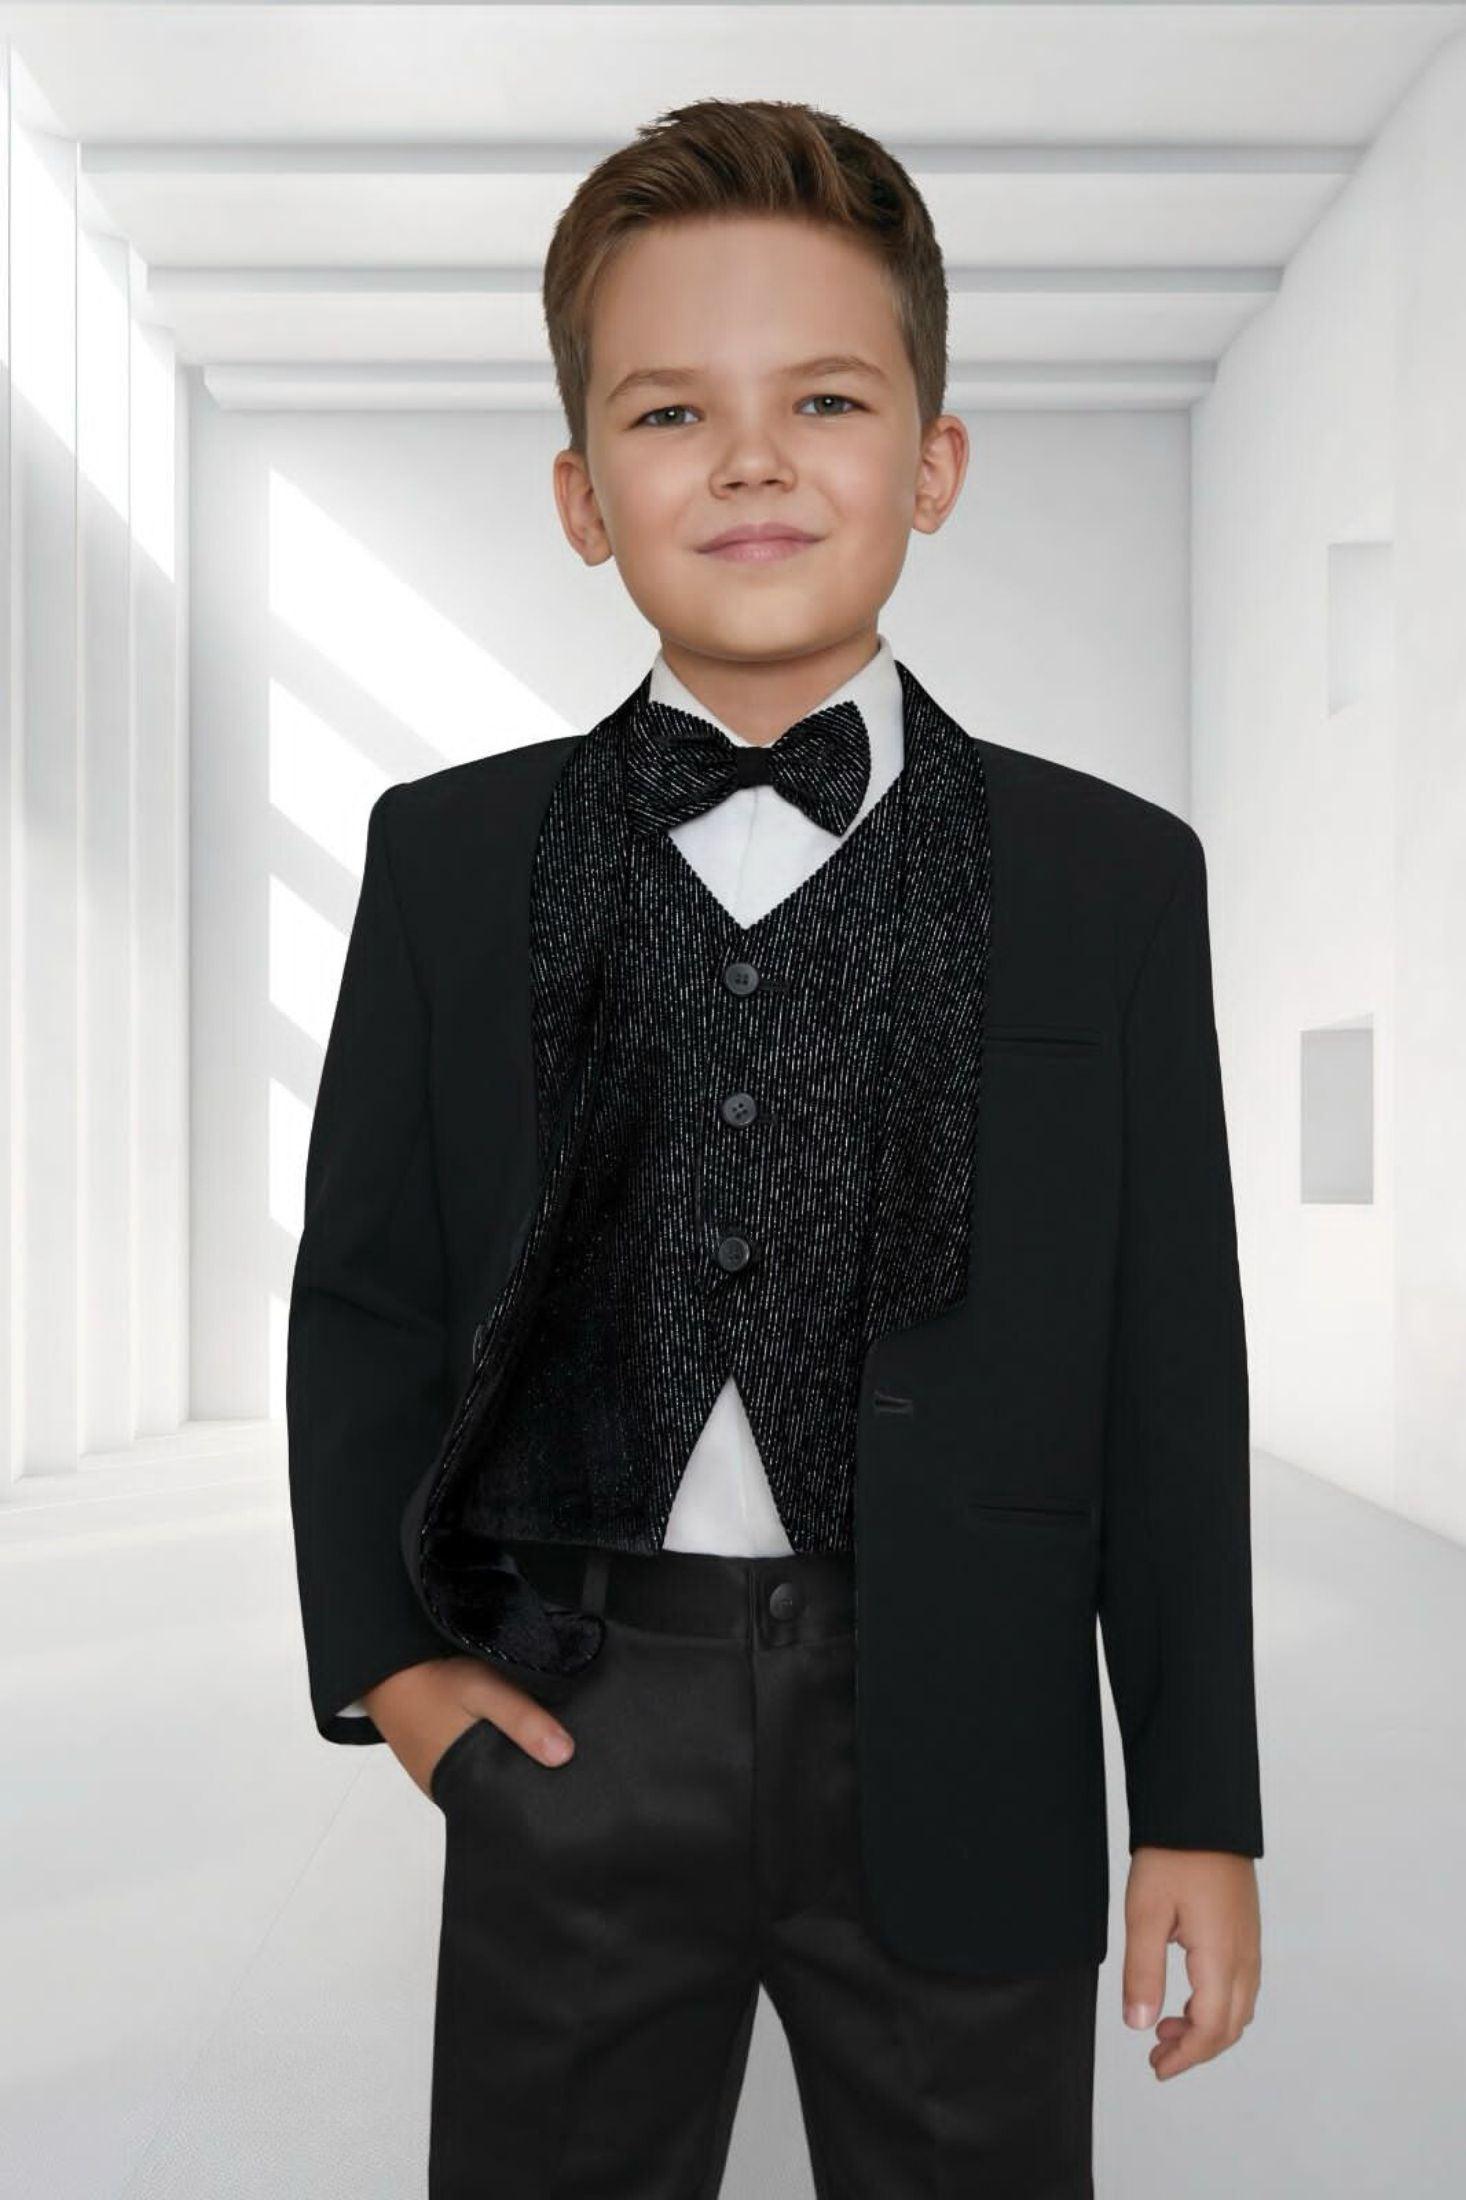 Stylish Black Tuxedo With Bow For Boys - Lagorii Kids